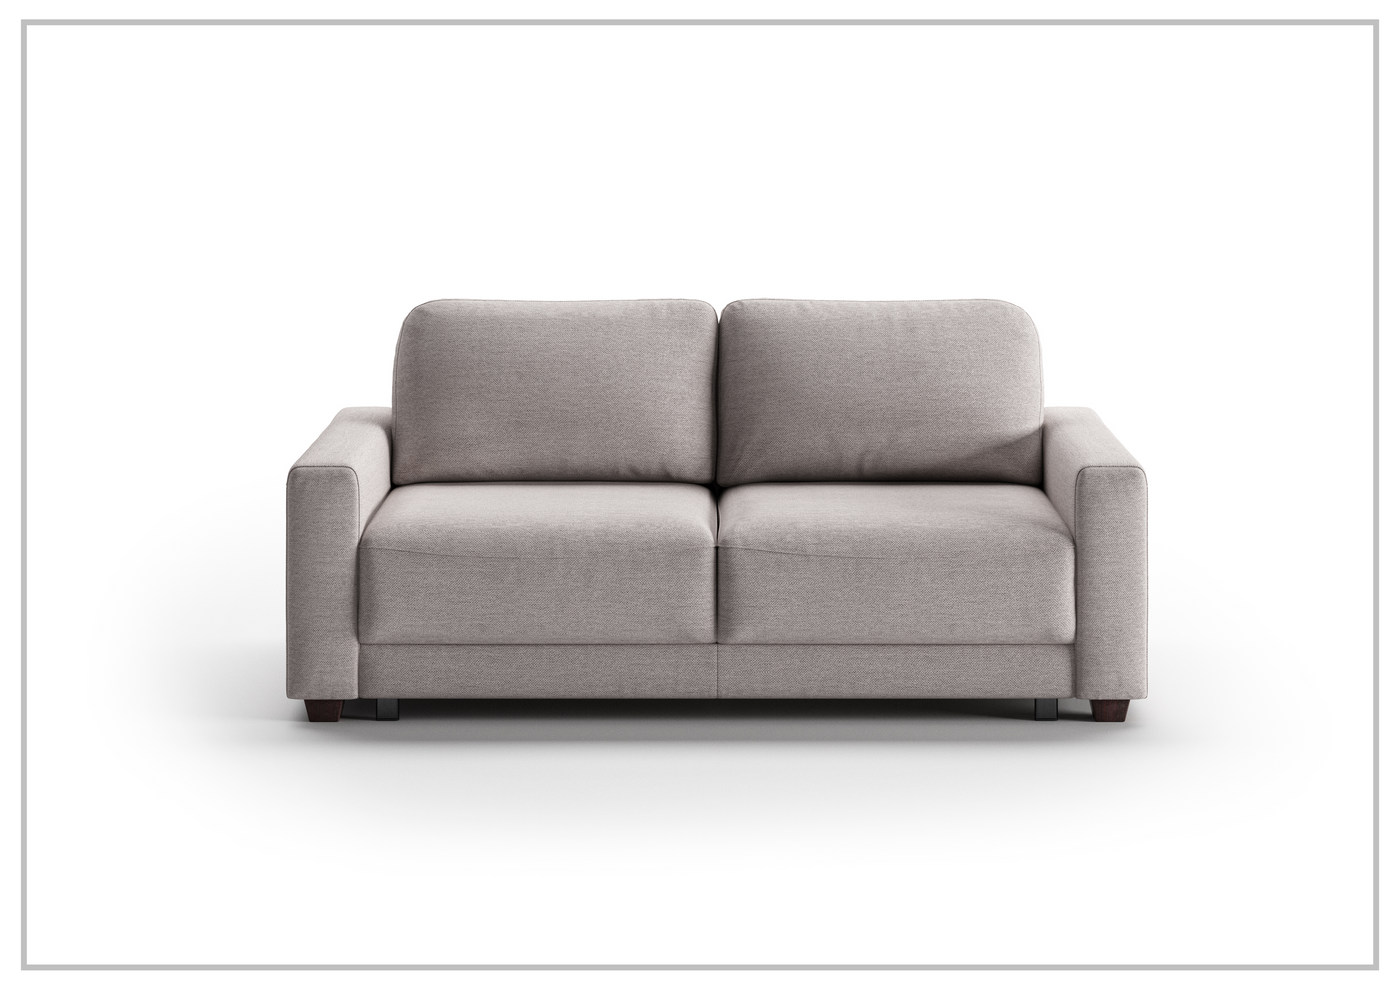 Belton Fabric Sofa Sleeper with Level Function